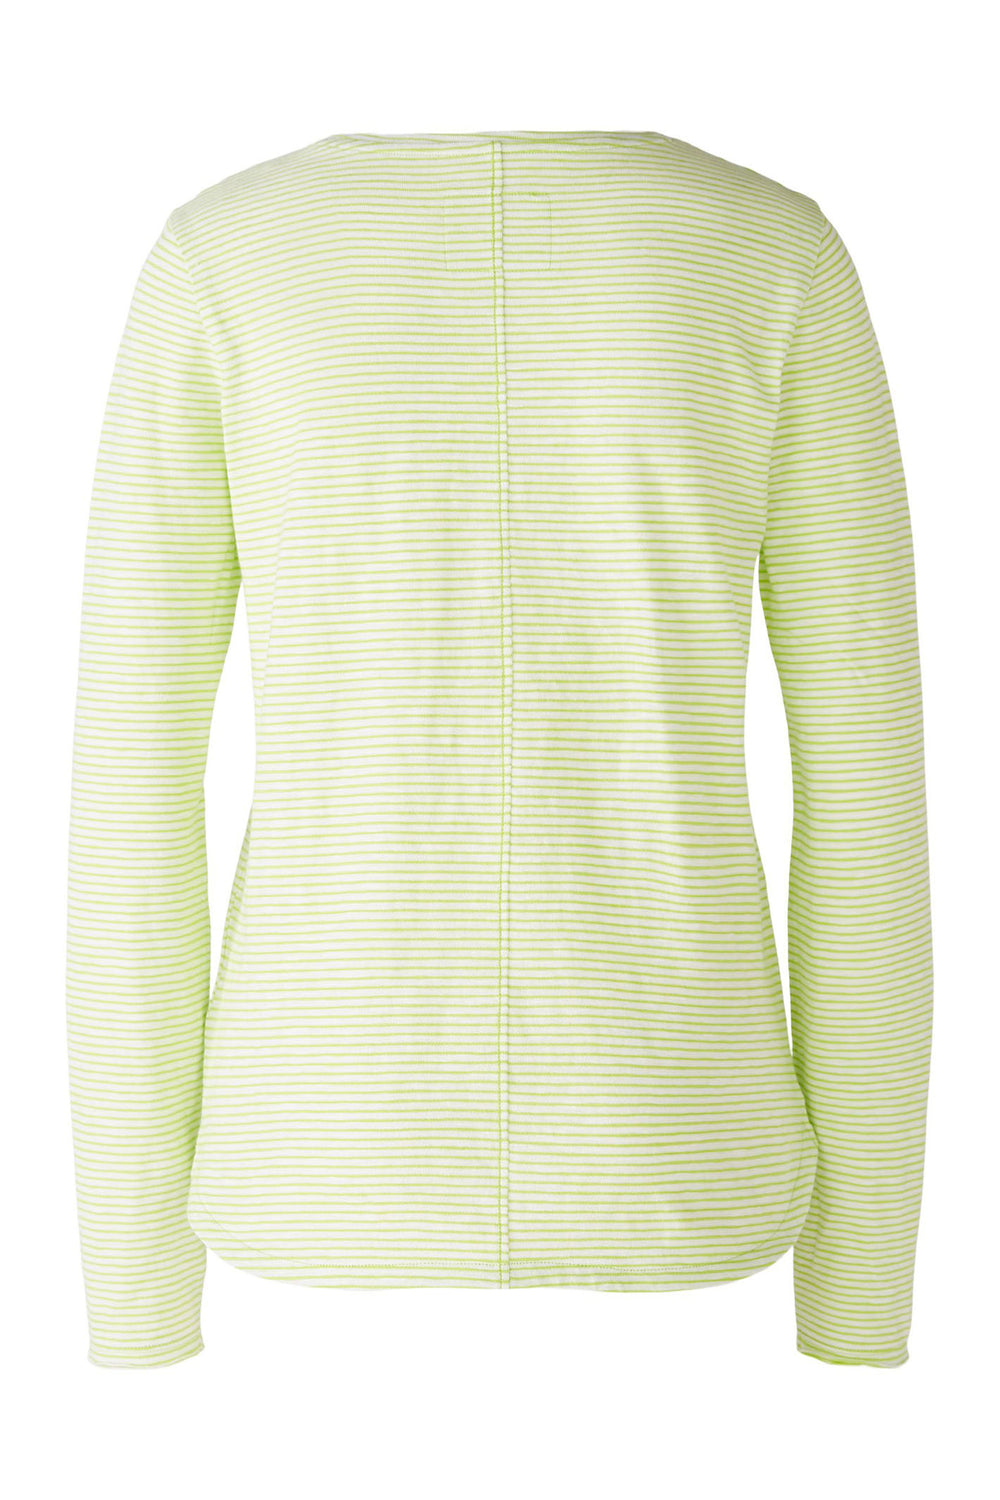 Oui 86752 Green White Stripe Breton Style Long Sleeve Top - Olivia Grace Fashion